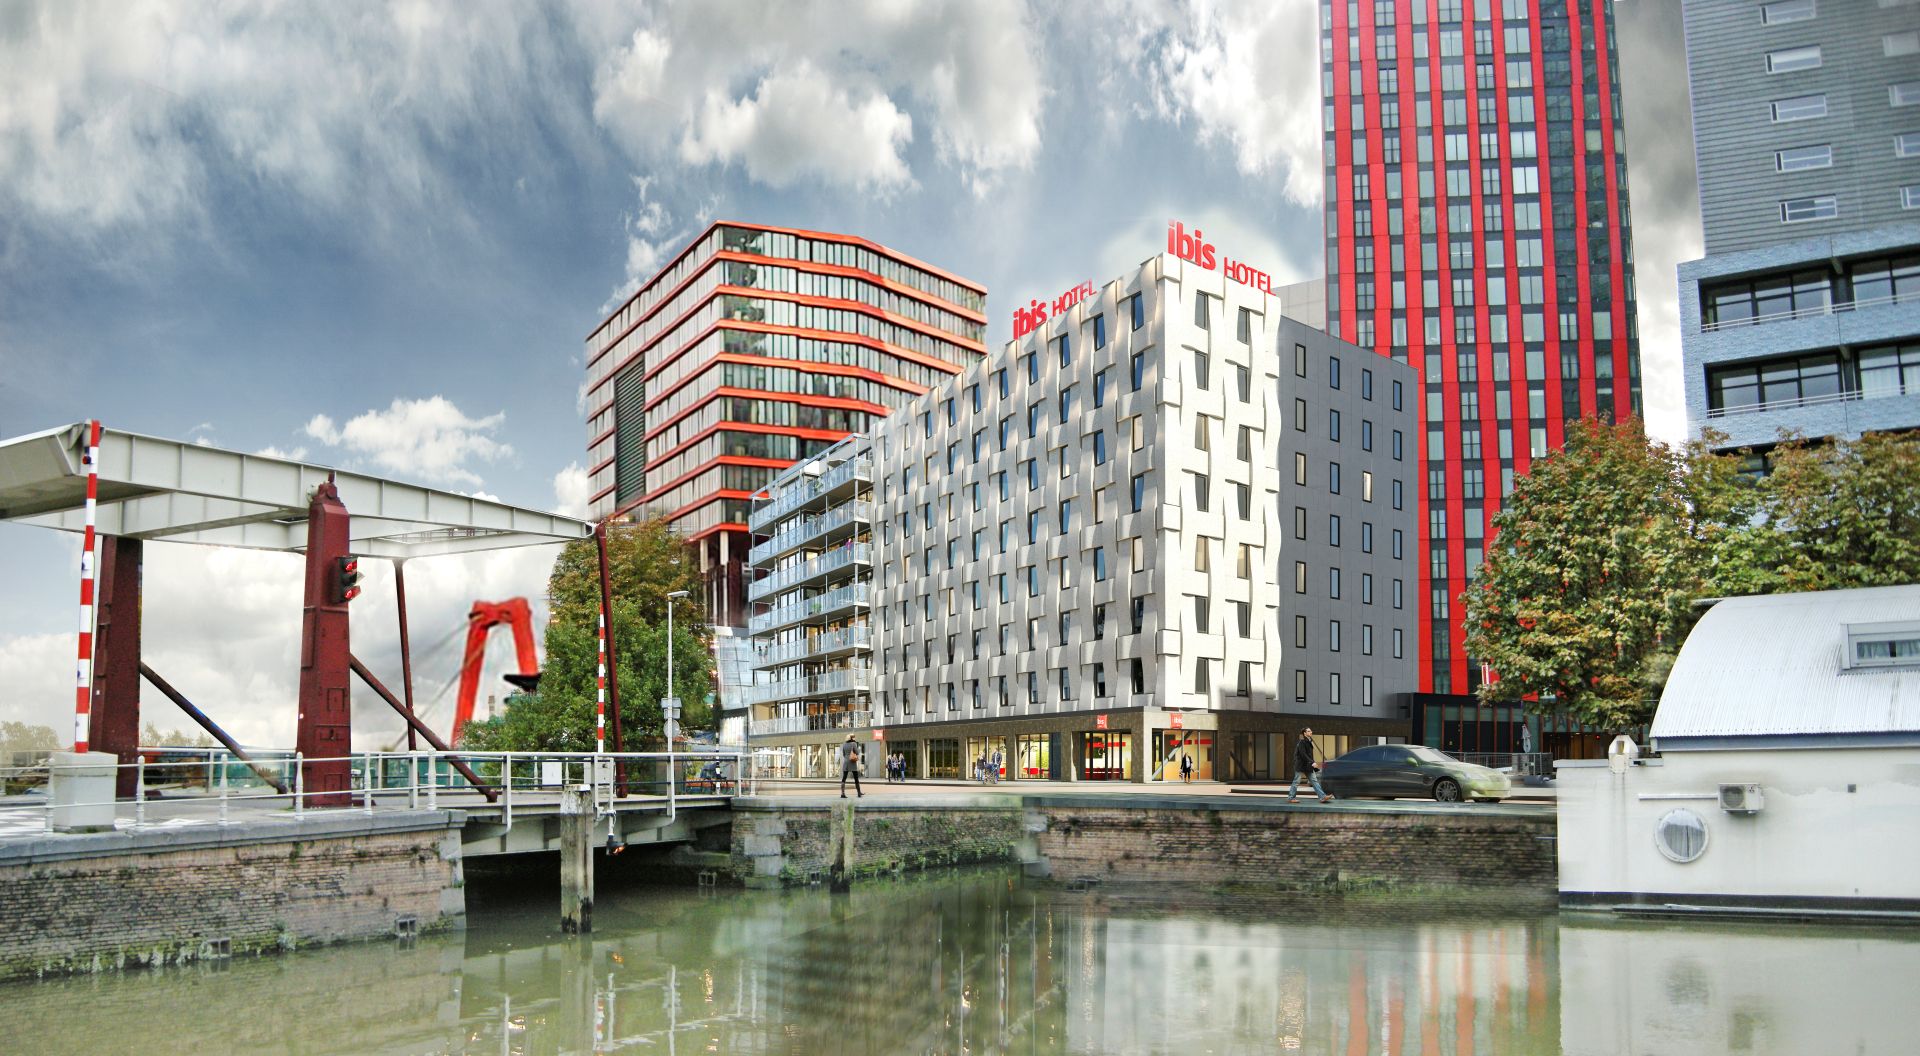 Ibis Rotterdam City Centre officieel geopend. Bron: FranchiseFormules.NL